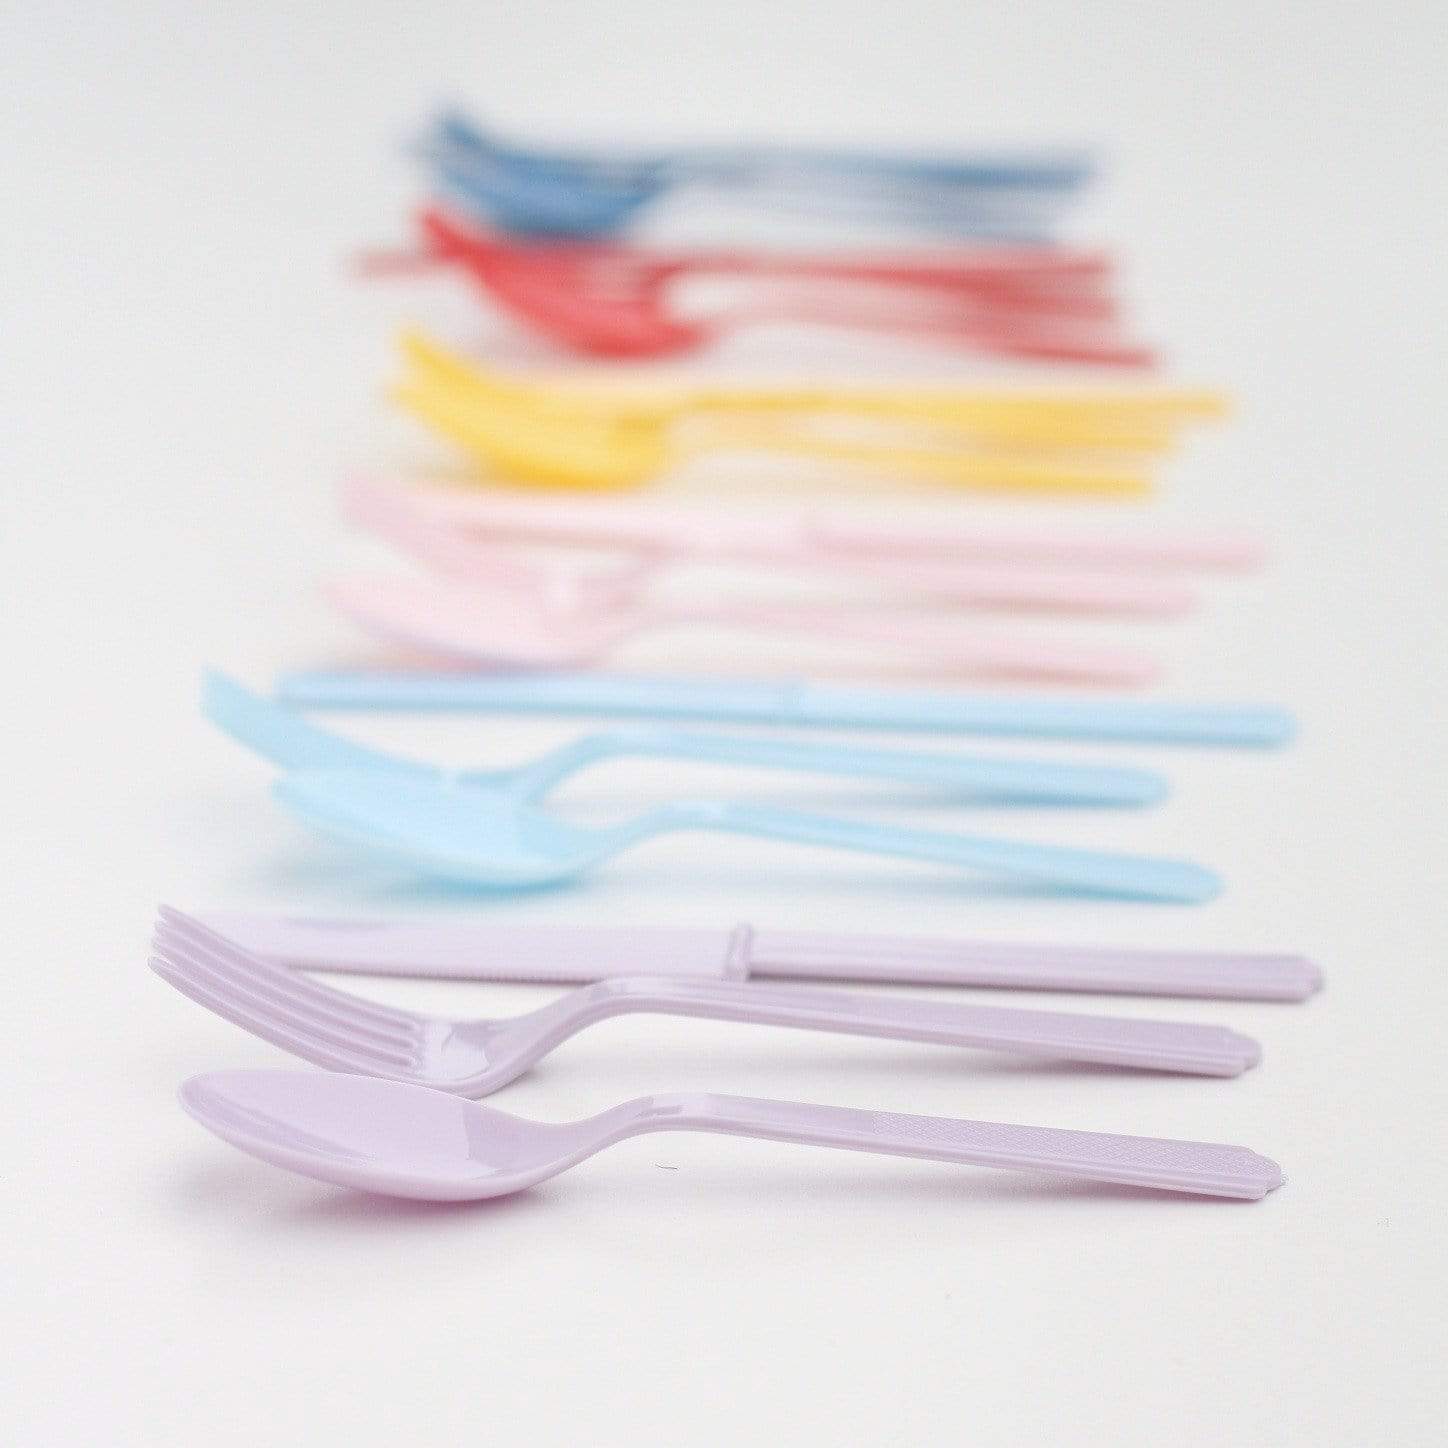 Red Plastic Cutlery | Disposable Party Utensils Unique